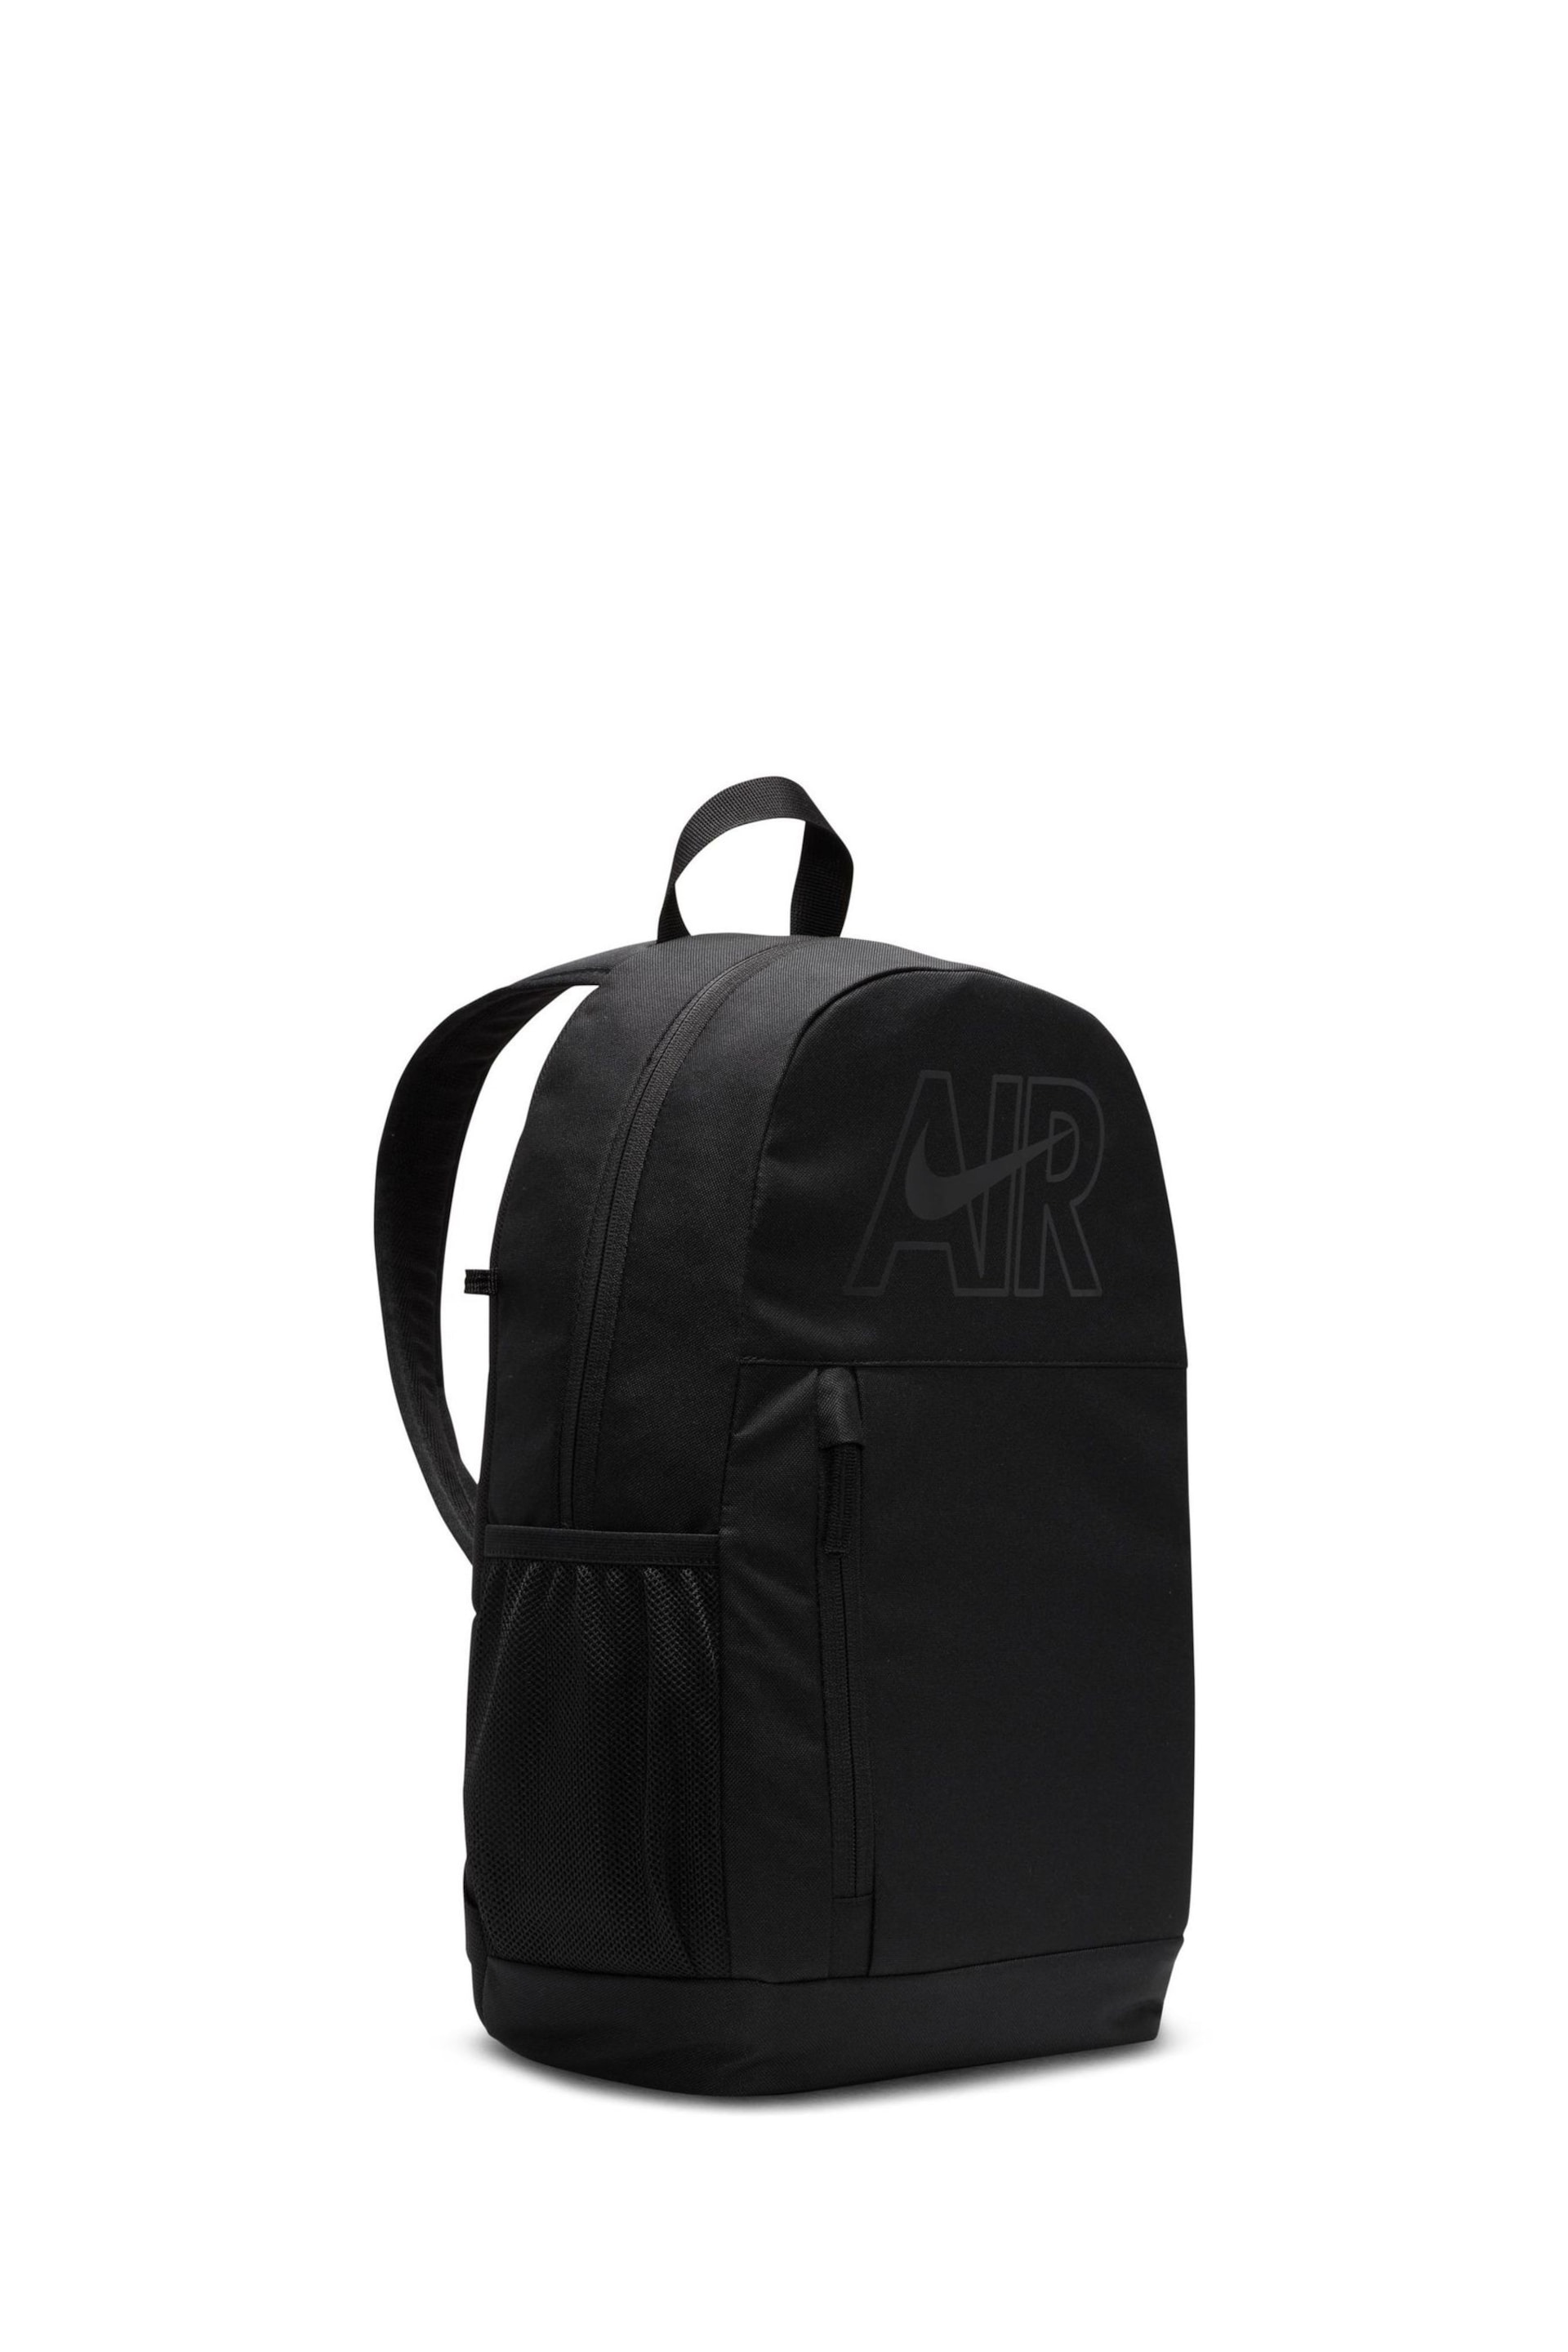 Nike Black Bag - Image 3 of 8